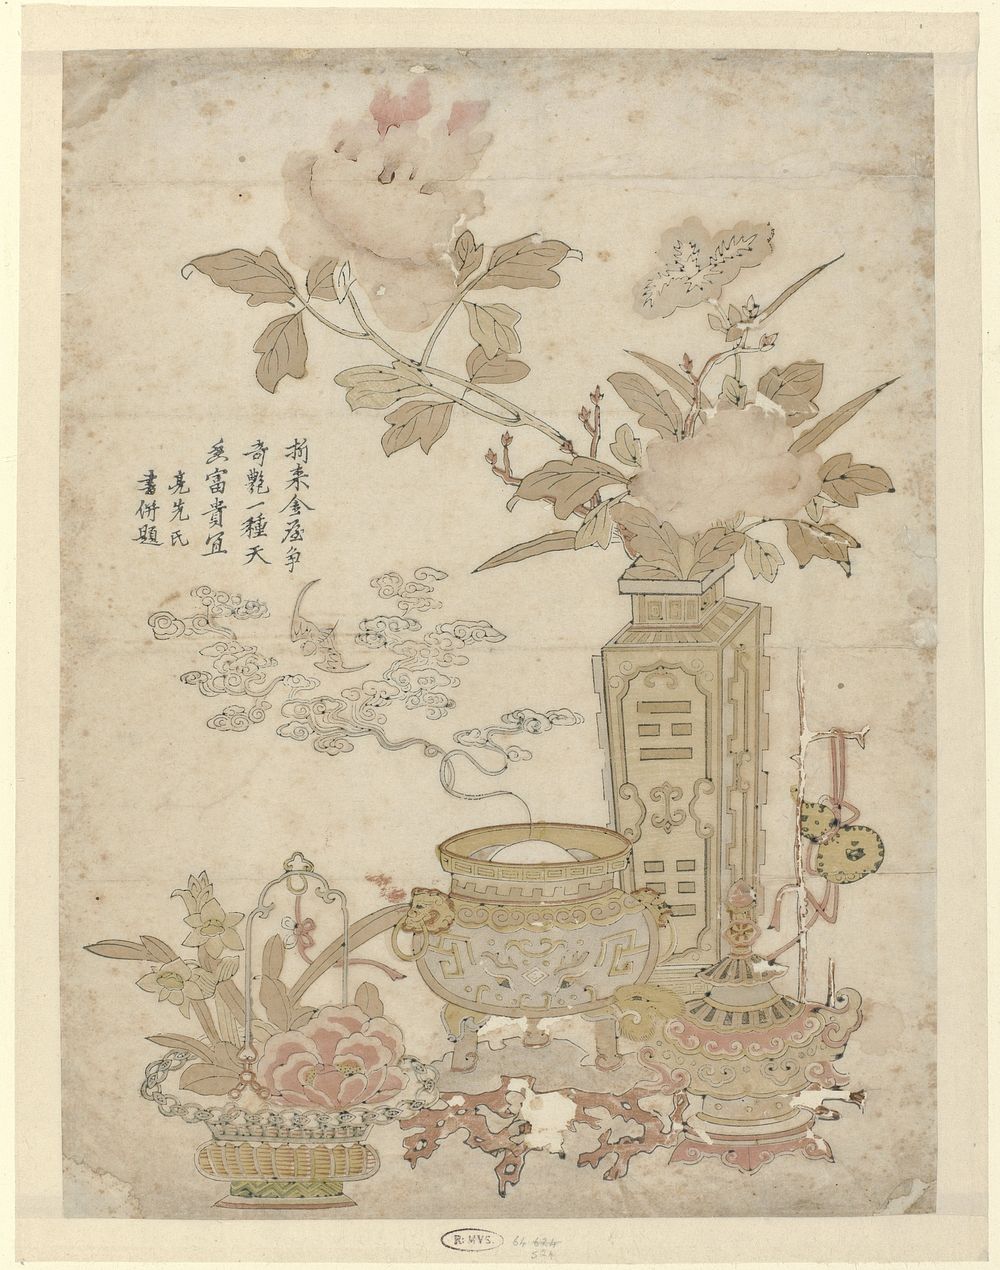 Bloemen en brandend wierookvat (c. 1600 - c. 1650) by Liangxian Ding